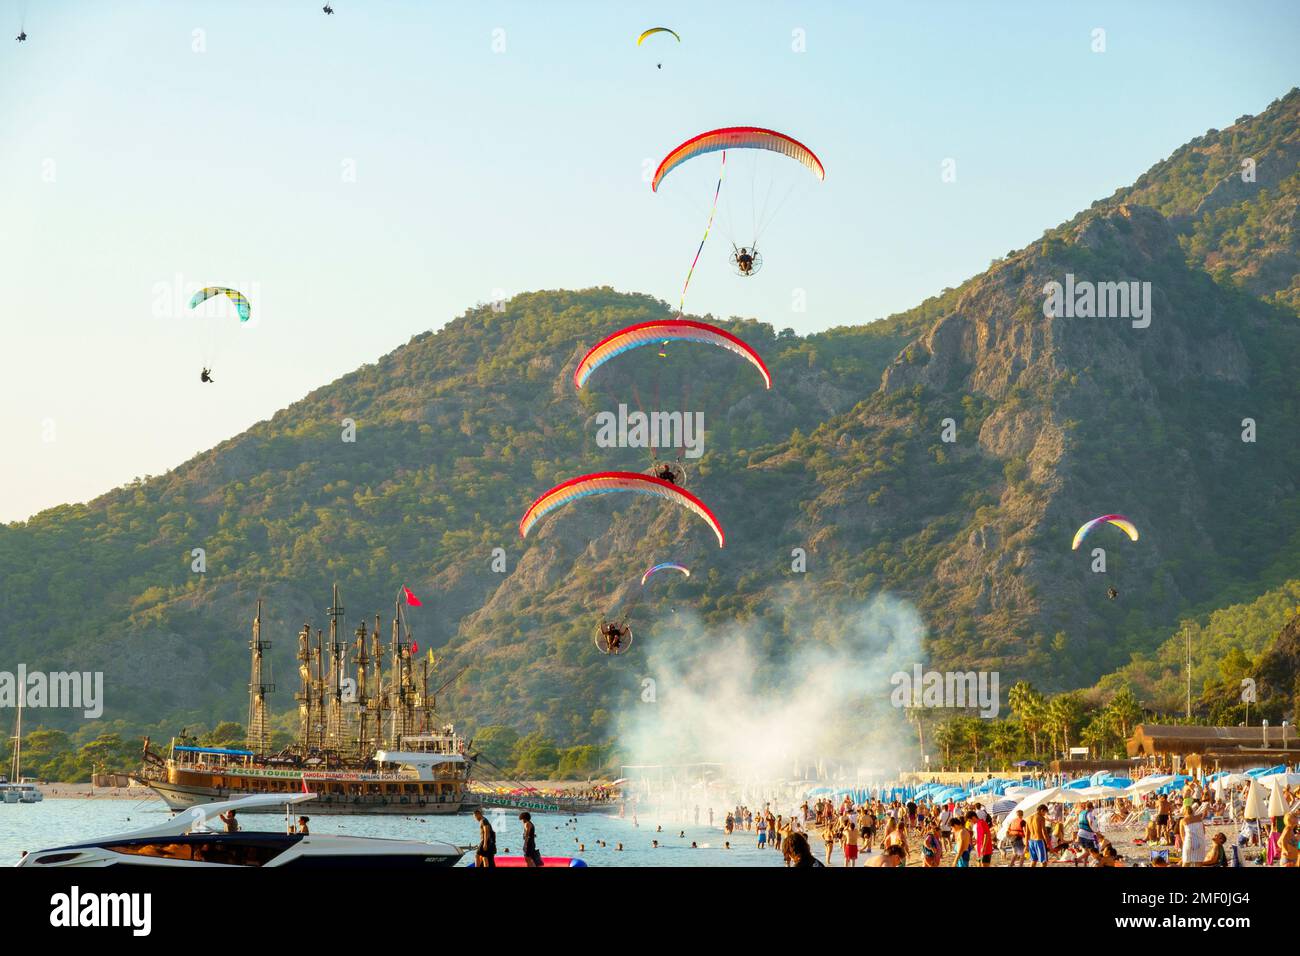 Paramotor pilots flying over boats and beachgoers in Belcekiz Beach, Oludeniz, Fethiye, Turkey Stock Photo